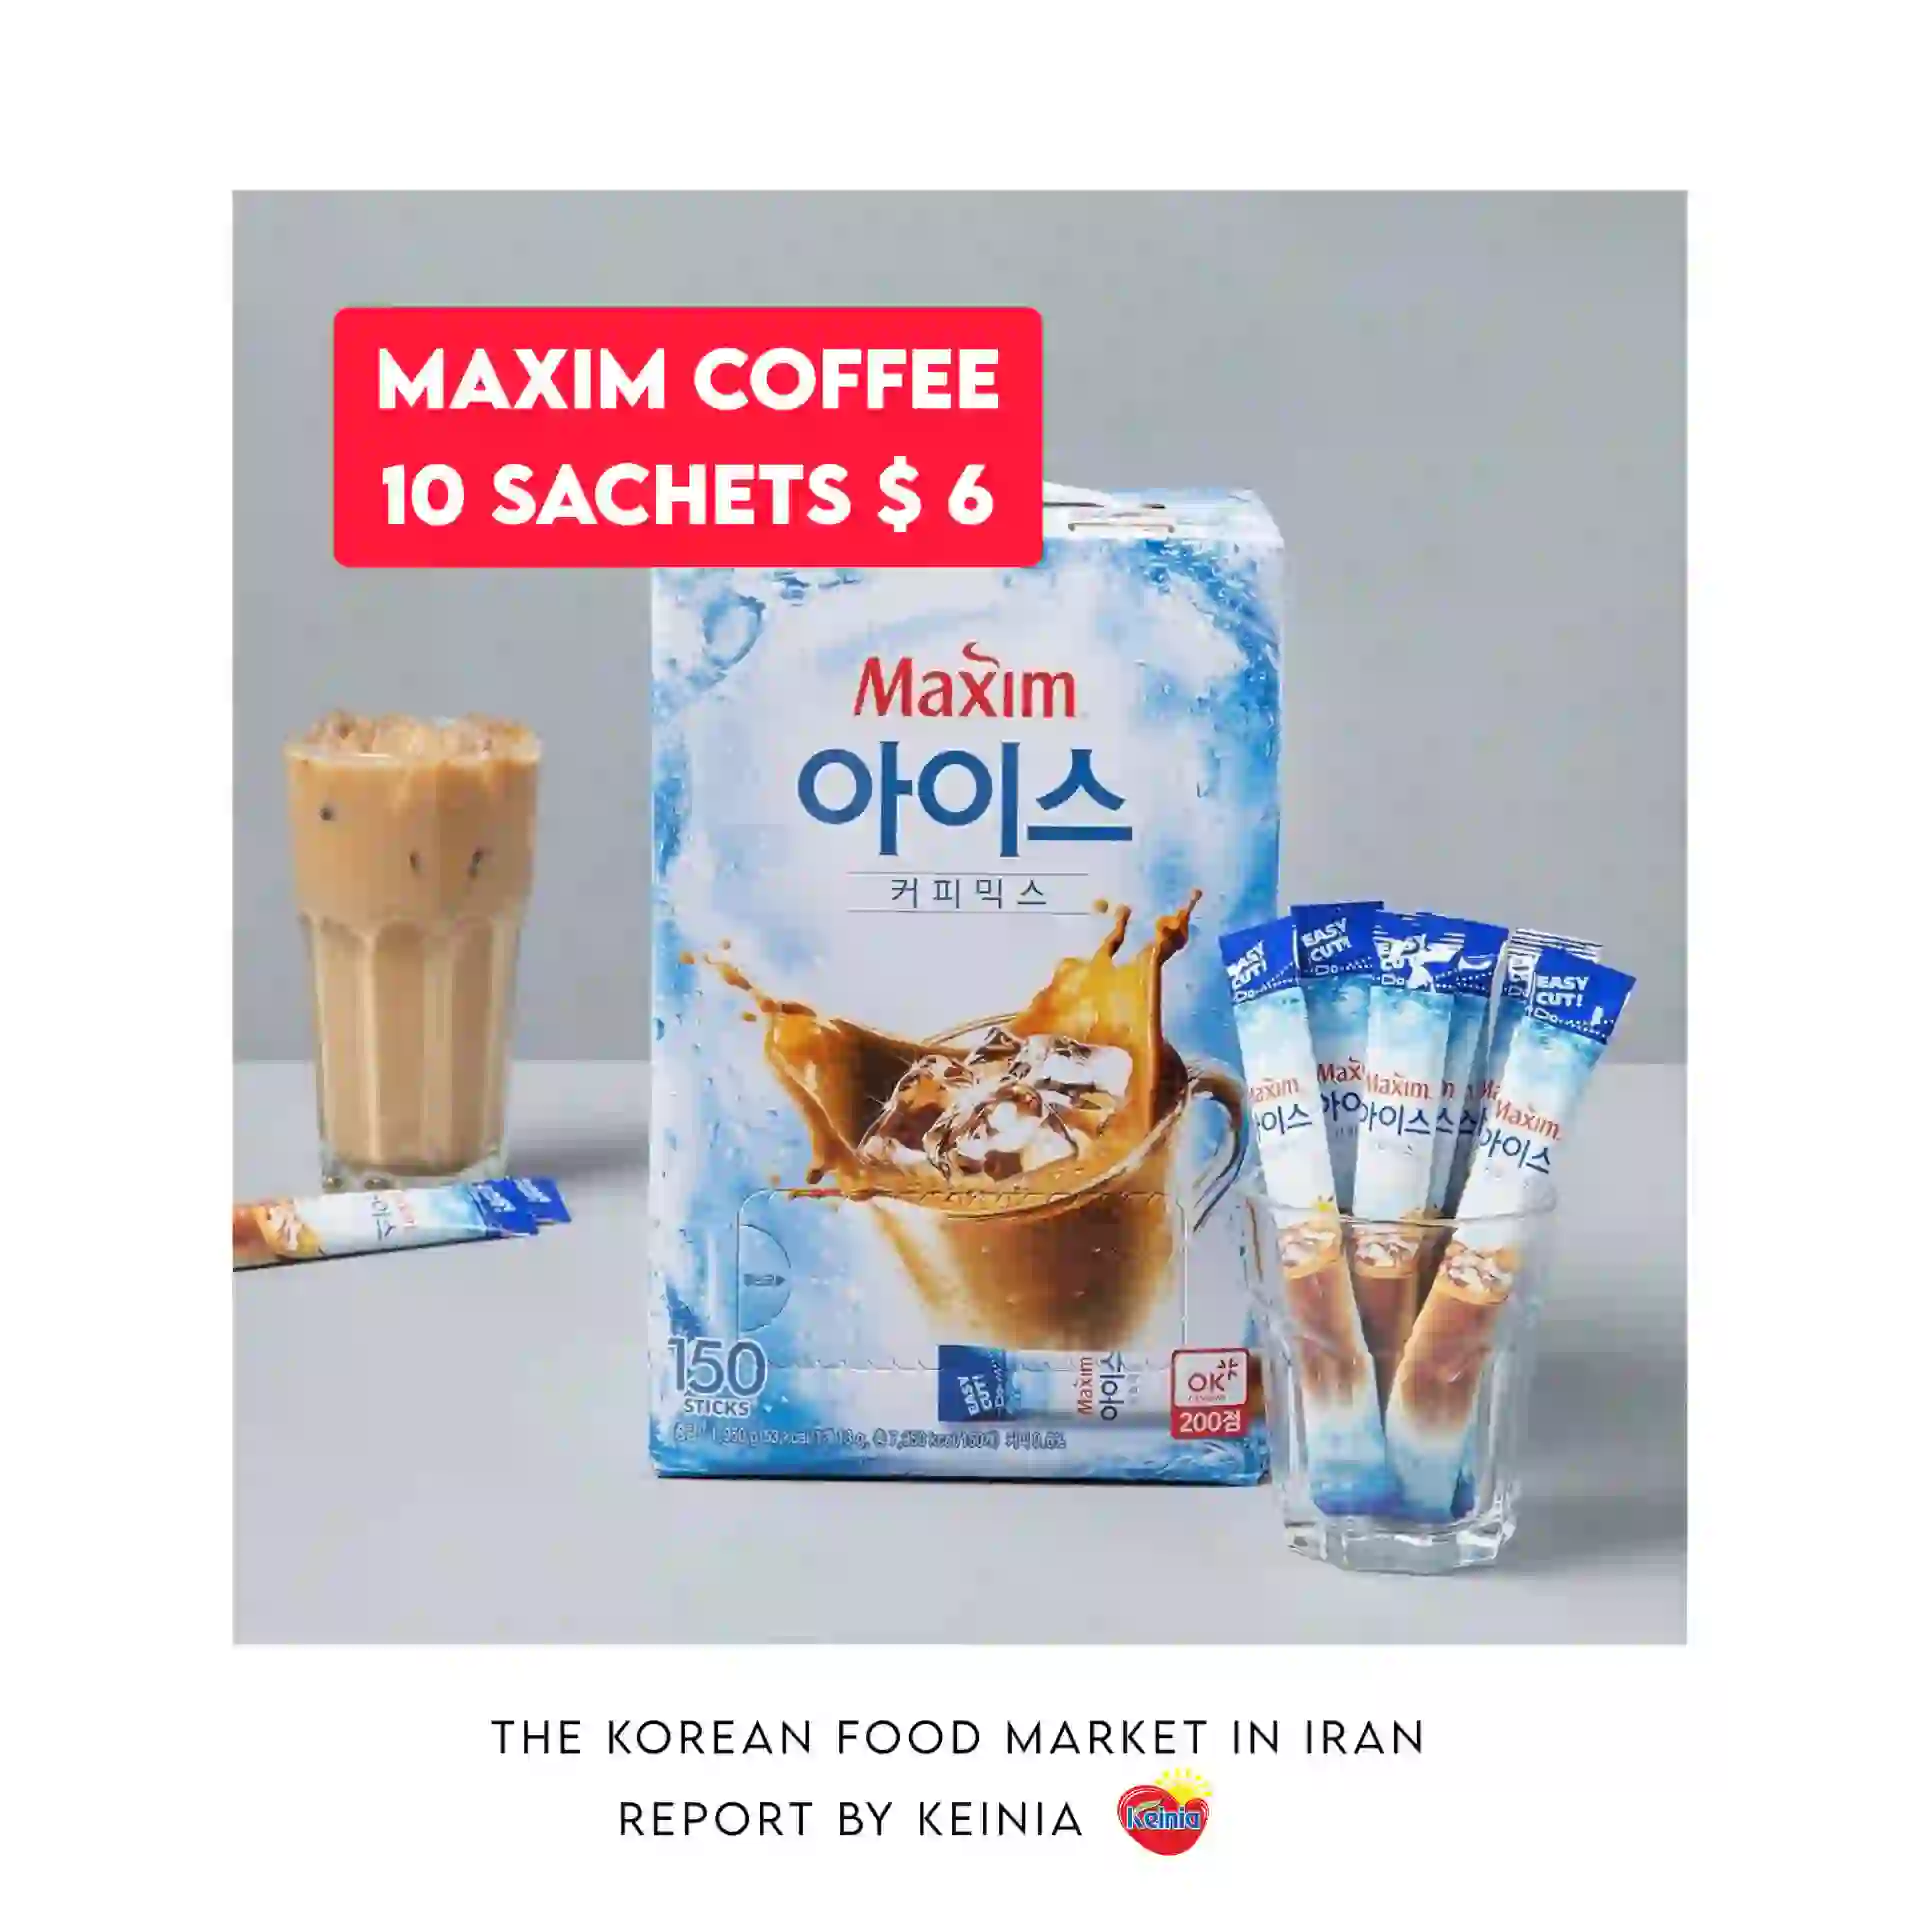 Maxim Korean coffee